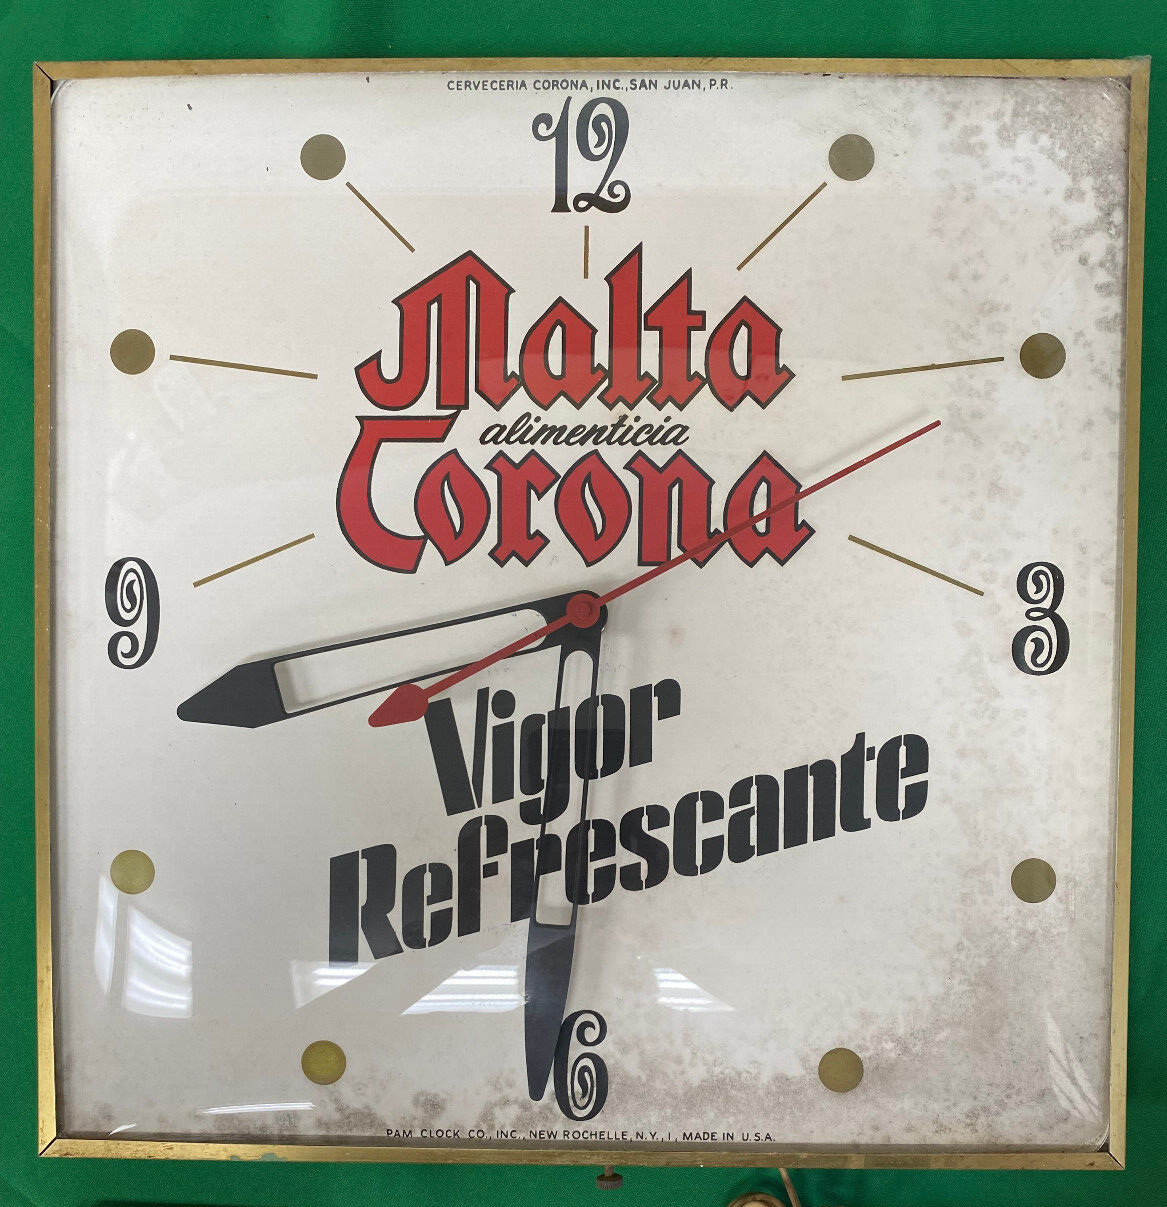 Puerto Rico, Vintage, MALTA CORONA ADVERTISEMENT, Hanging Wall Clock, 16